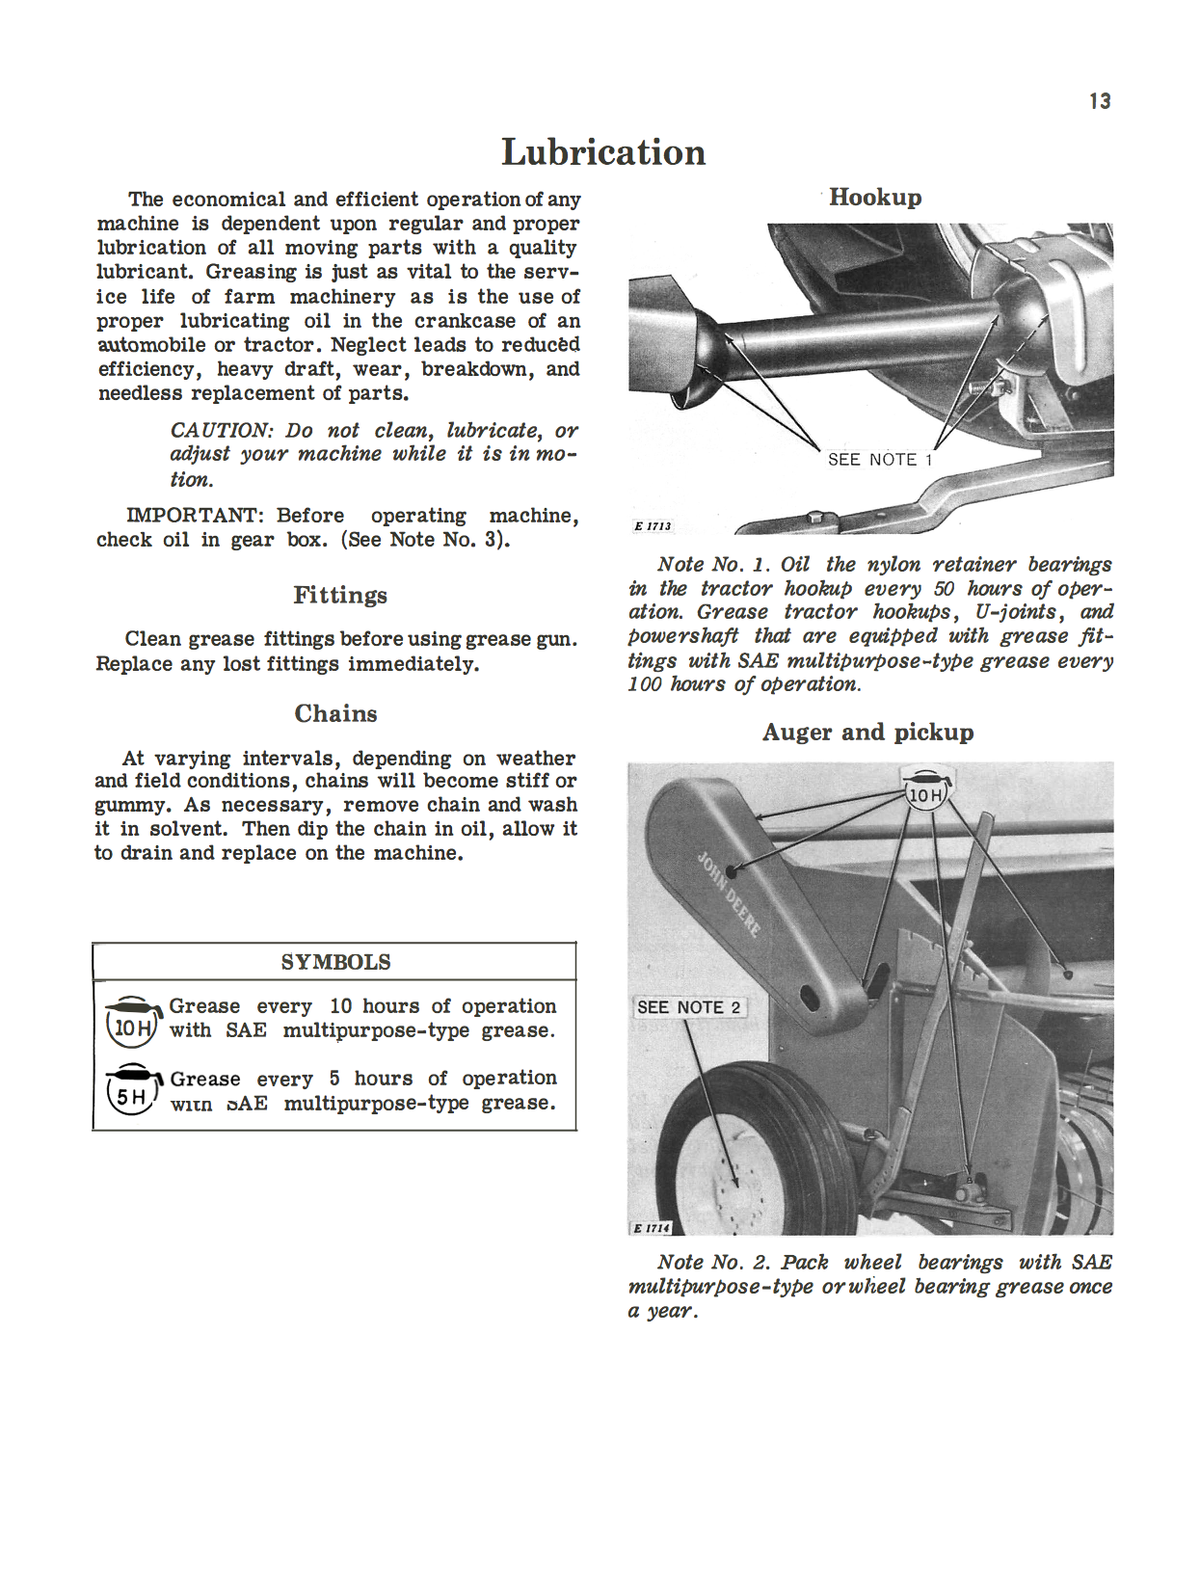 John Deere No. 14T Automatic Pickup Baler - Operator's Manual - Ag Manuals - A Provider of Digital Farm Manuals - 3